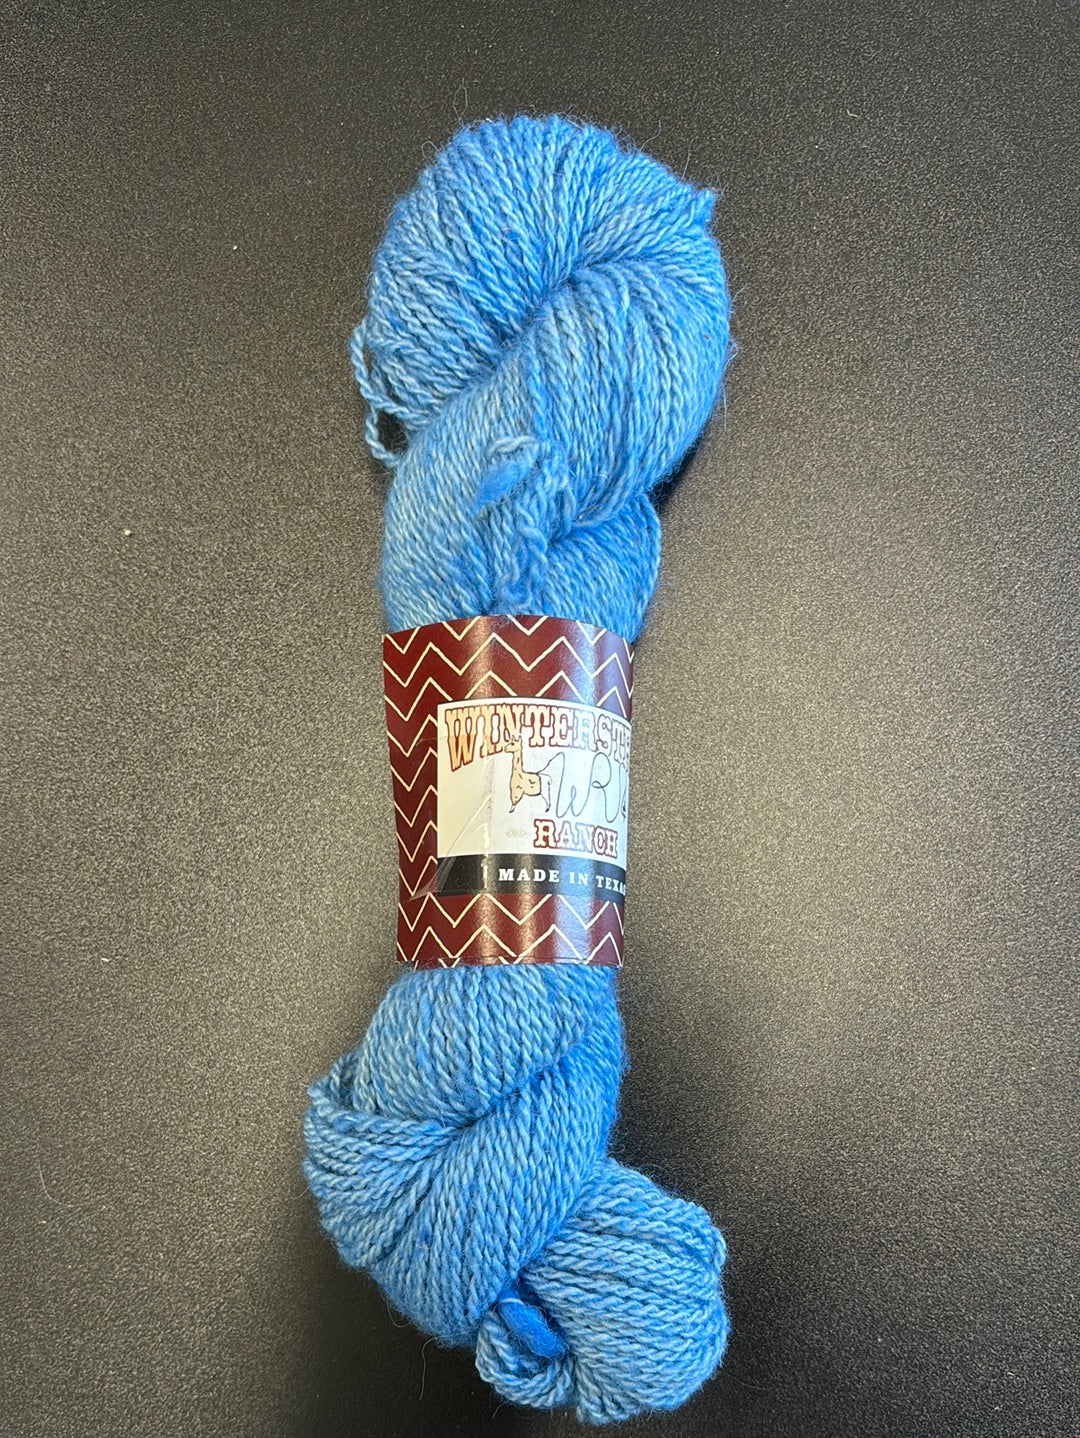 Light blue alpaca yarn